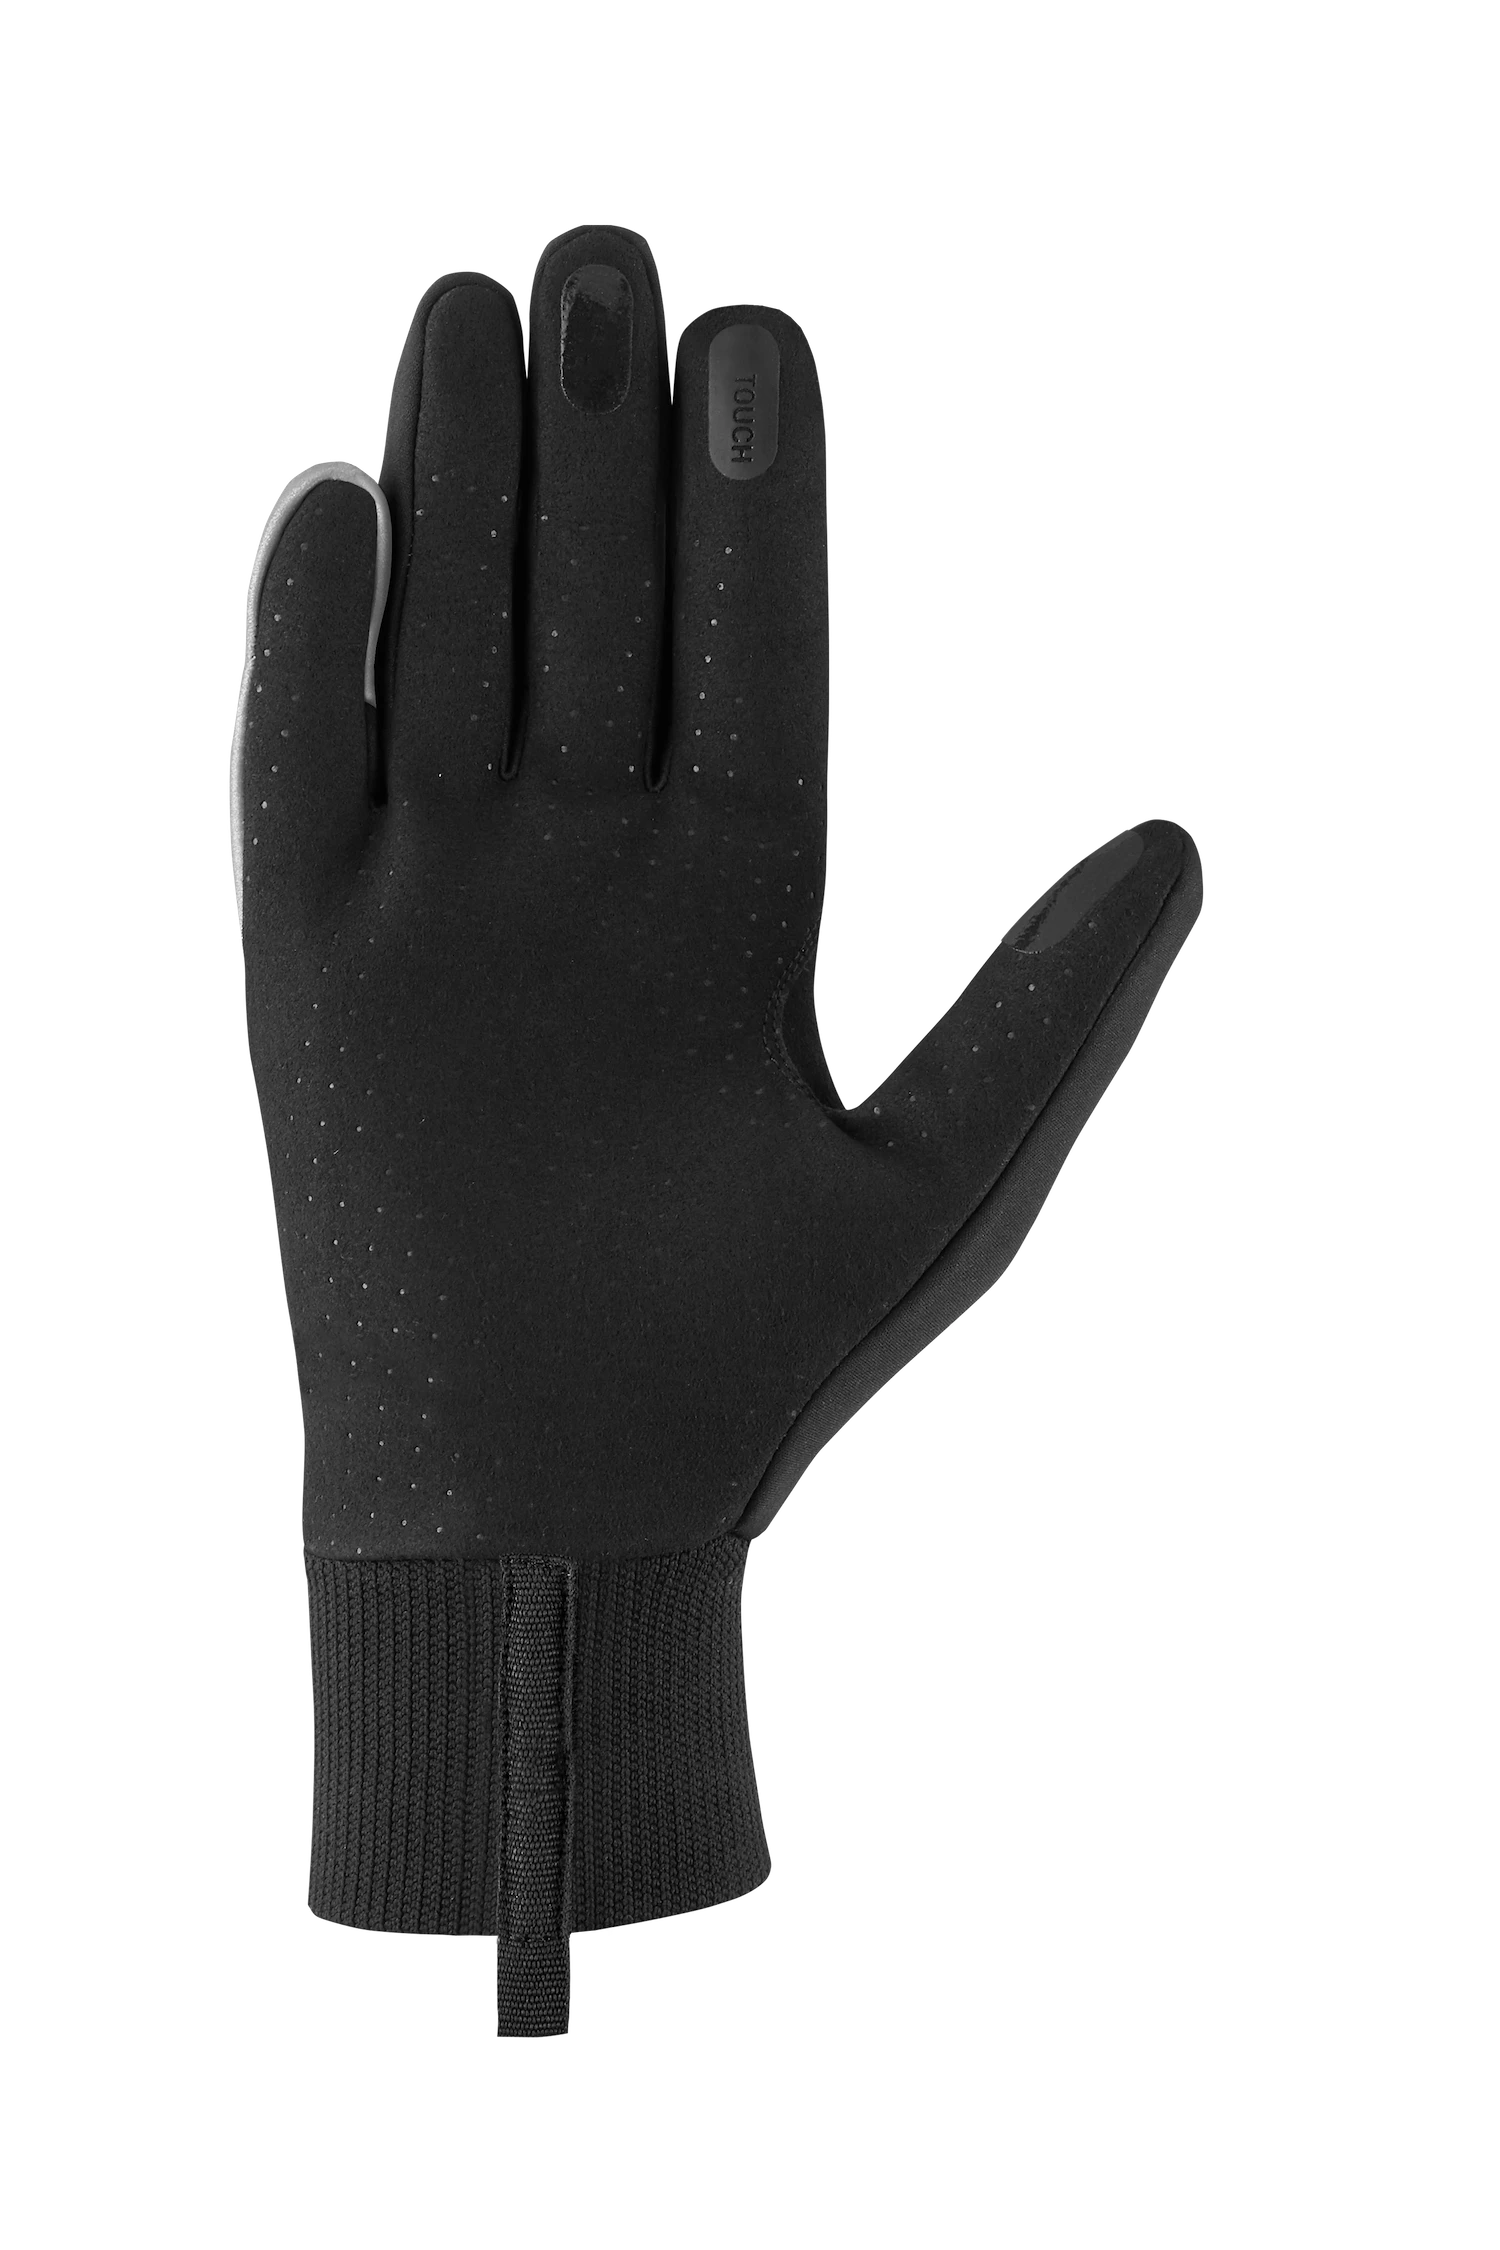 CUBE Handschuhe Performance All Season langfinger black